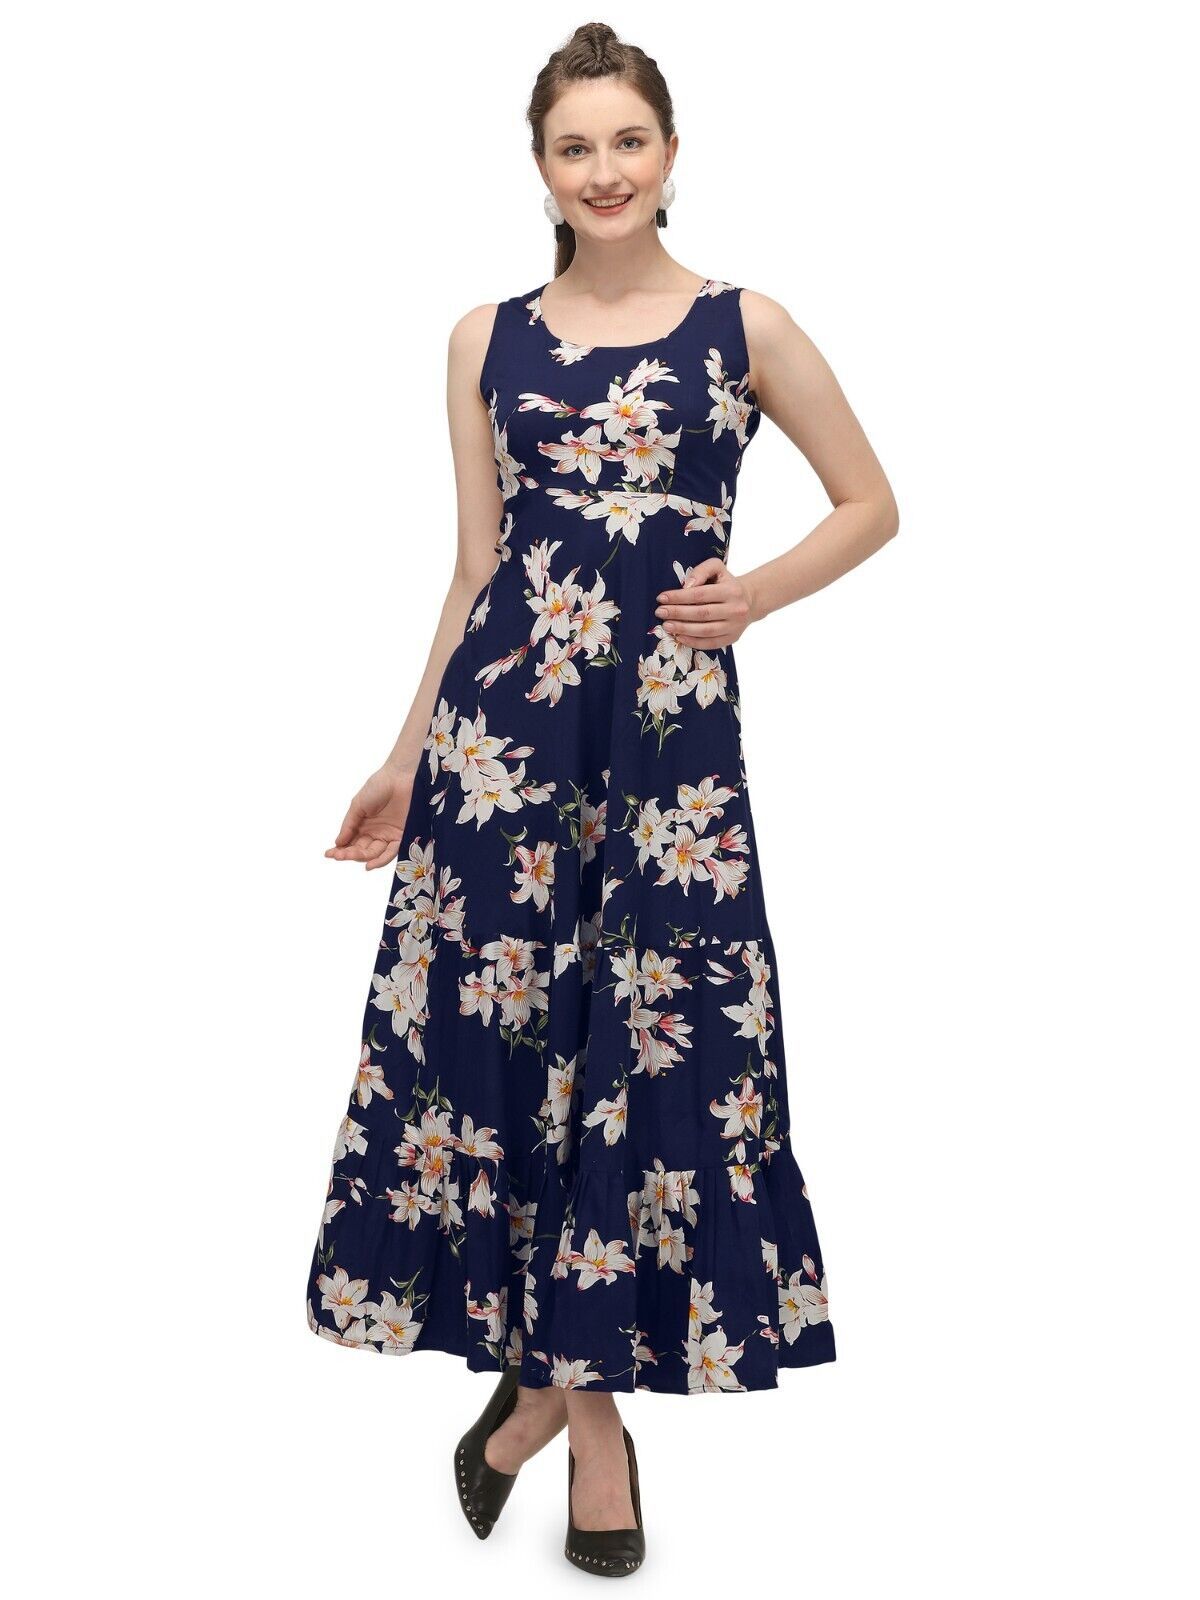 Primary image for Damen Tunika Blau Tulpen Bedruckt Lang Faltenrock, Ärmellos Ausgestellt Kleid